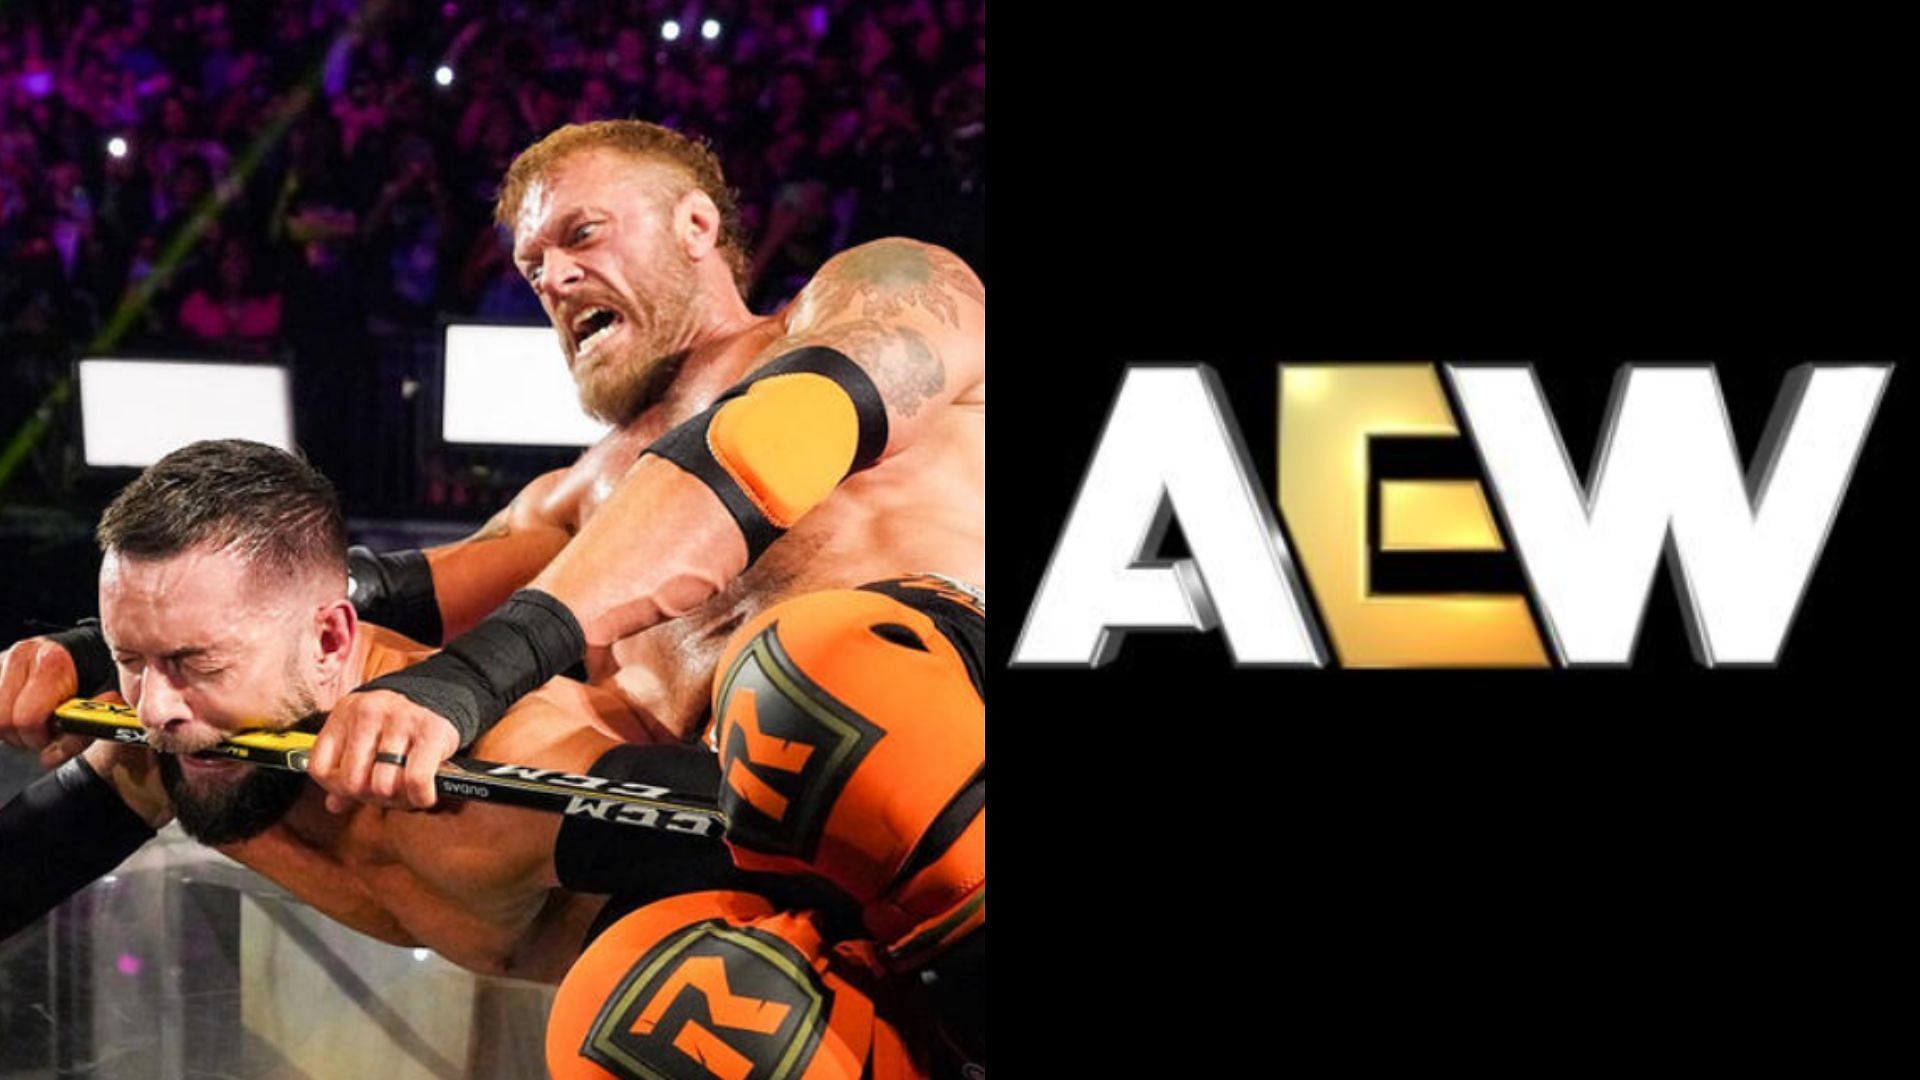 Adam Copeland and Finn Balor were rivals in WWE [Image Credits: WWE